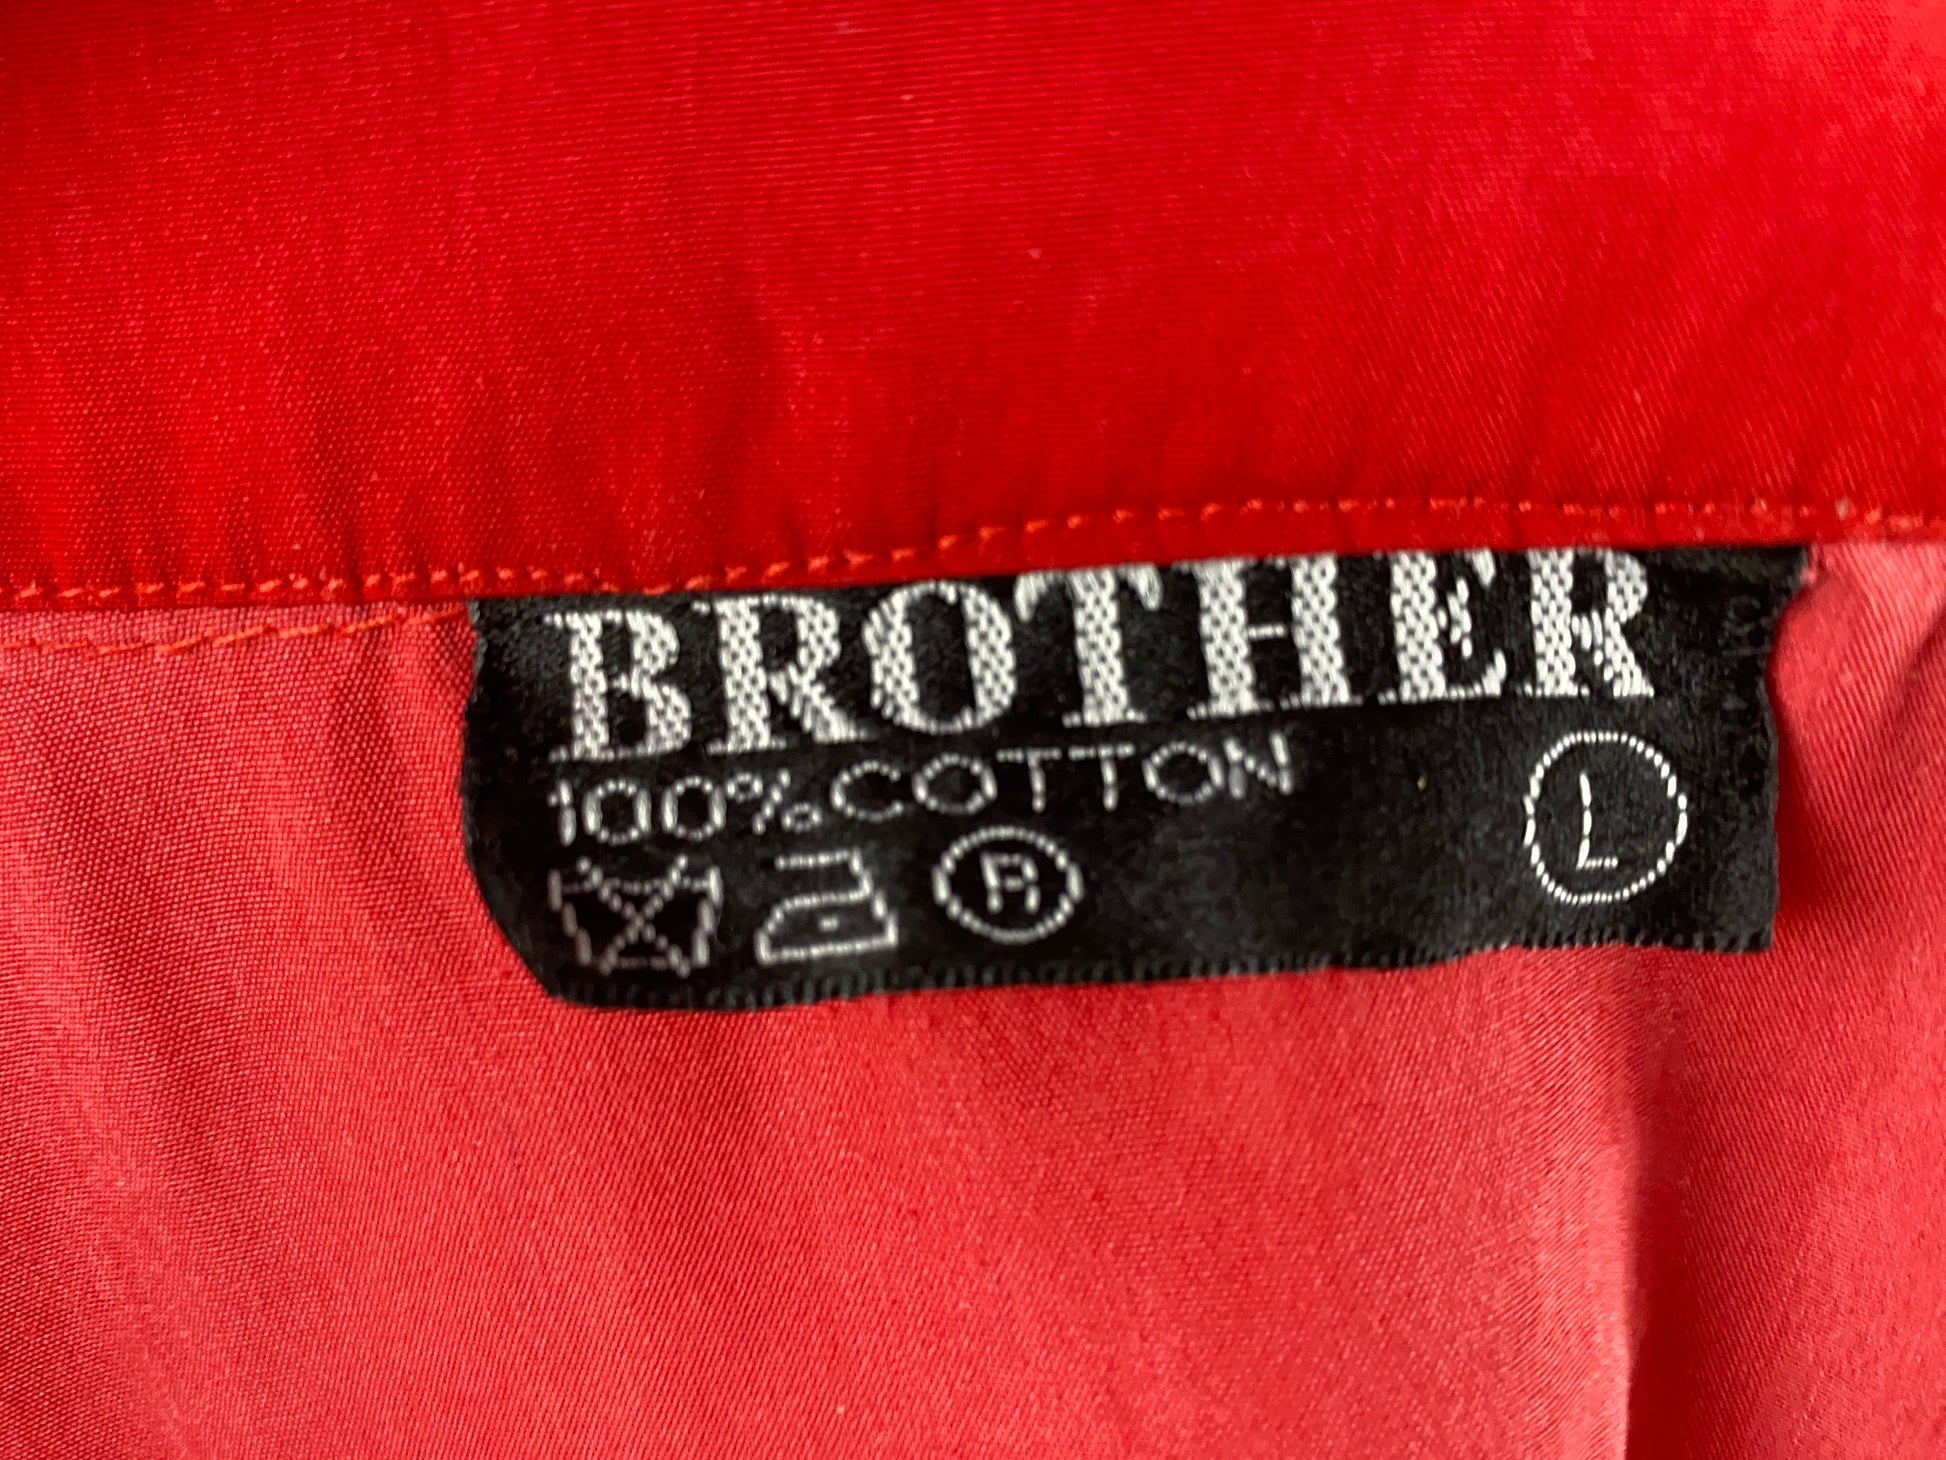 Brother Vintage Men's Dragon Print Short Sleeve Shirt